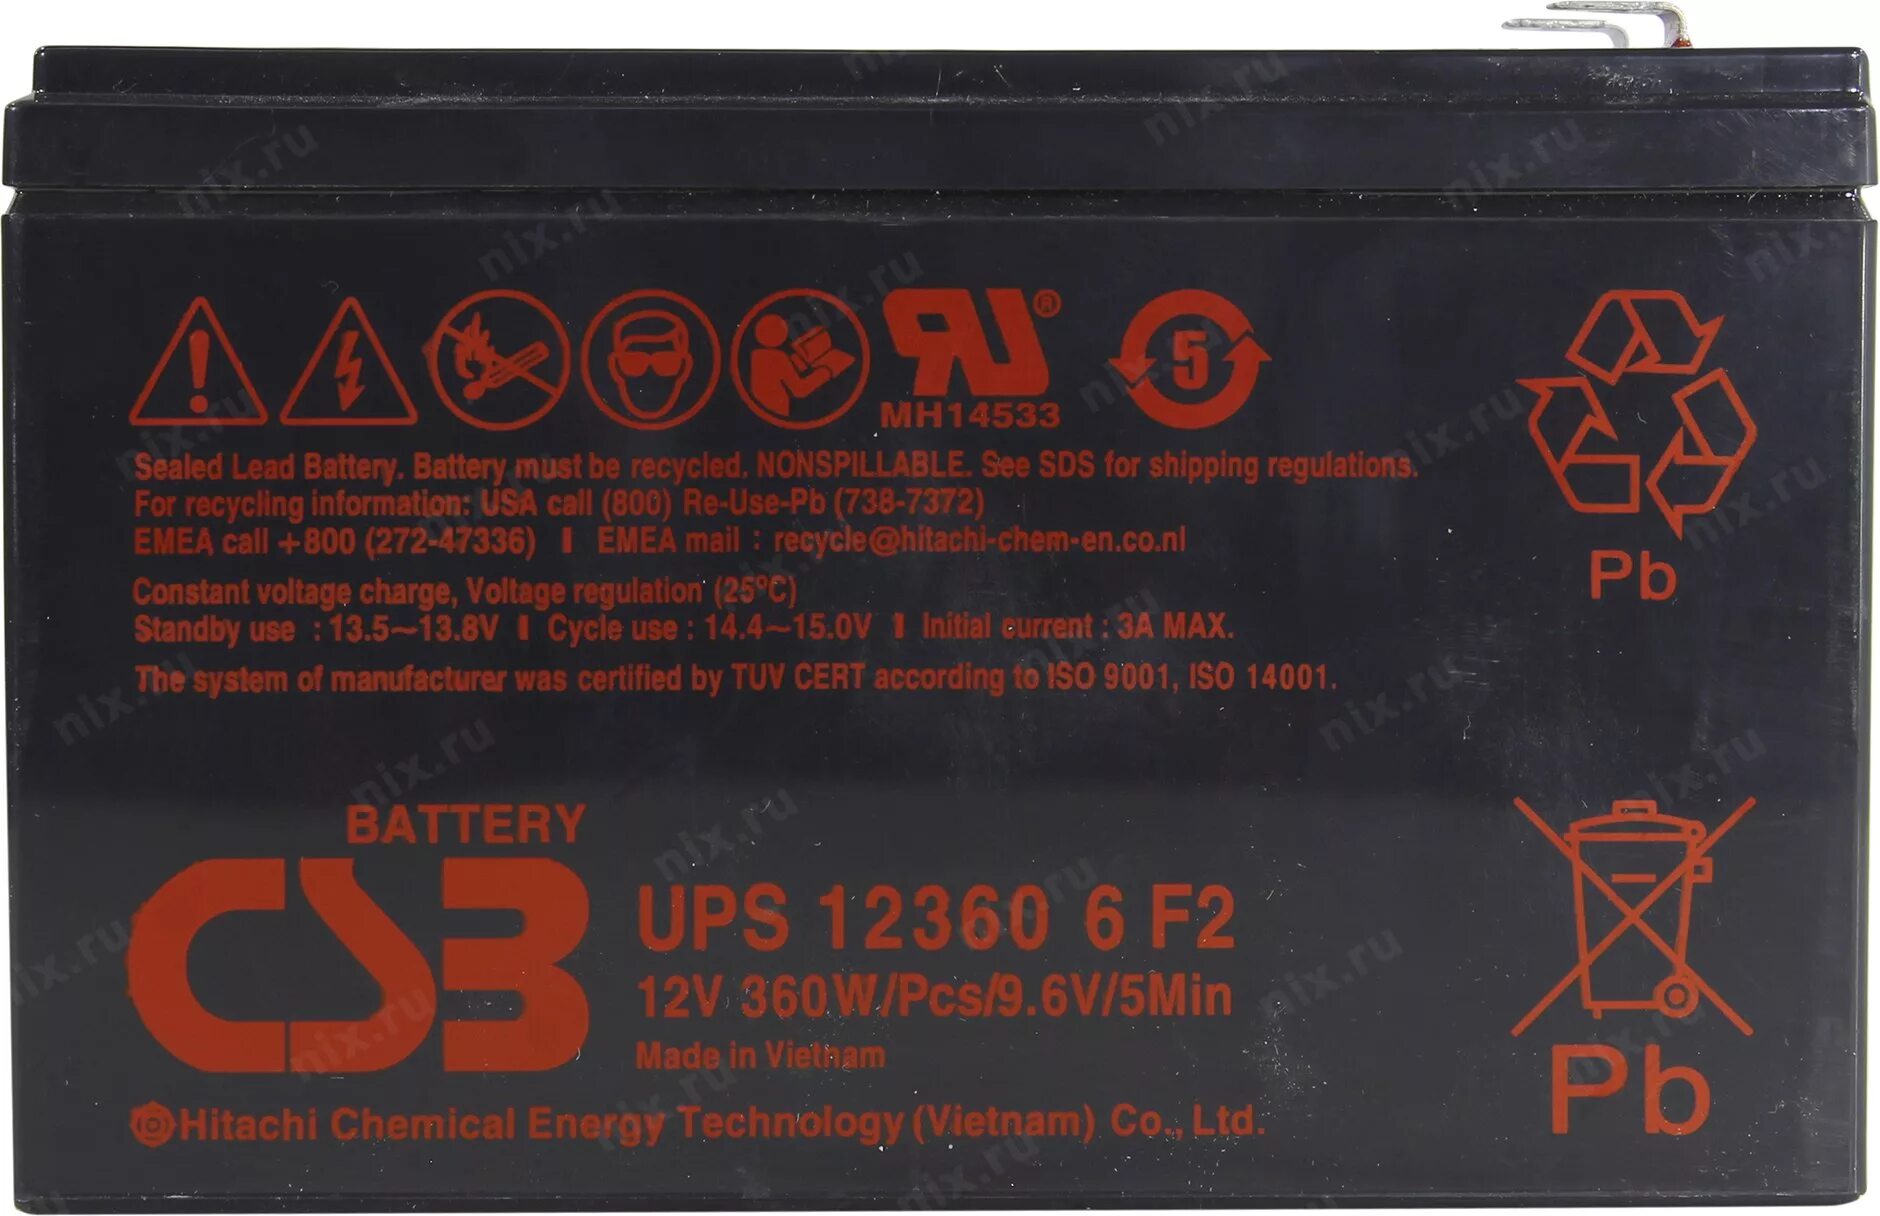 Аккумулятор CSB ups 123606. АКБ 12-5 CSB ups (ups122406 f2). Ups 12360 7 f2 12v 360w/PCS/9.6V/5min. Аккумулятор ups12360 7 f2.